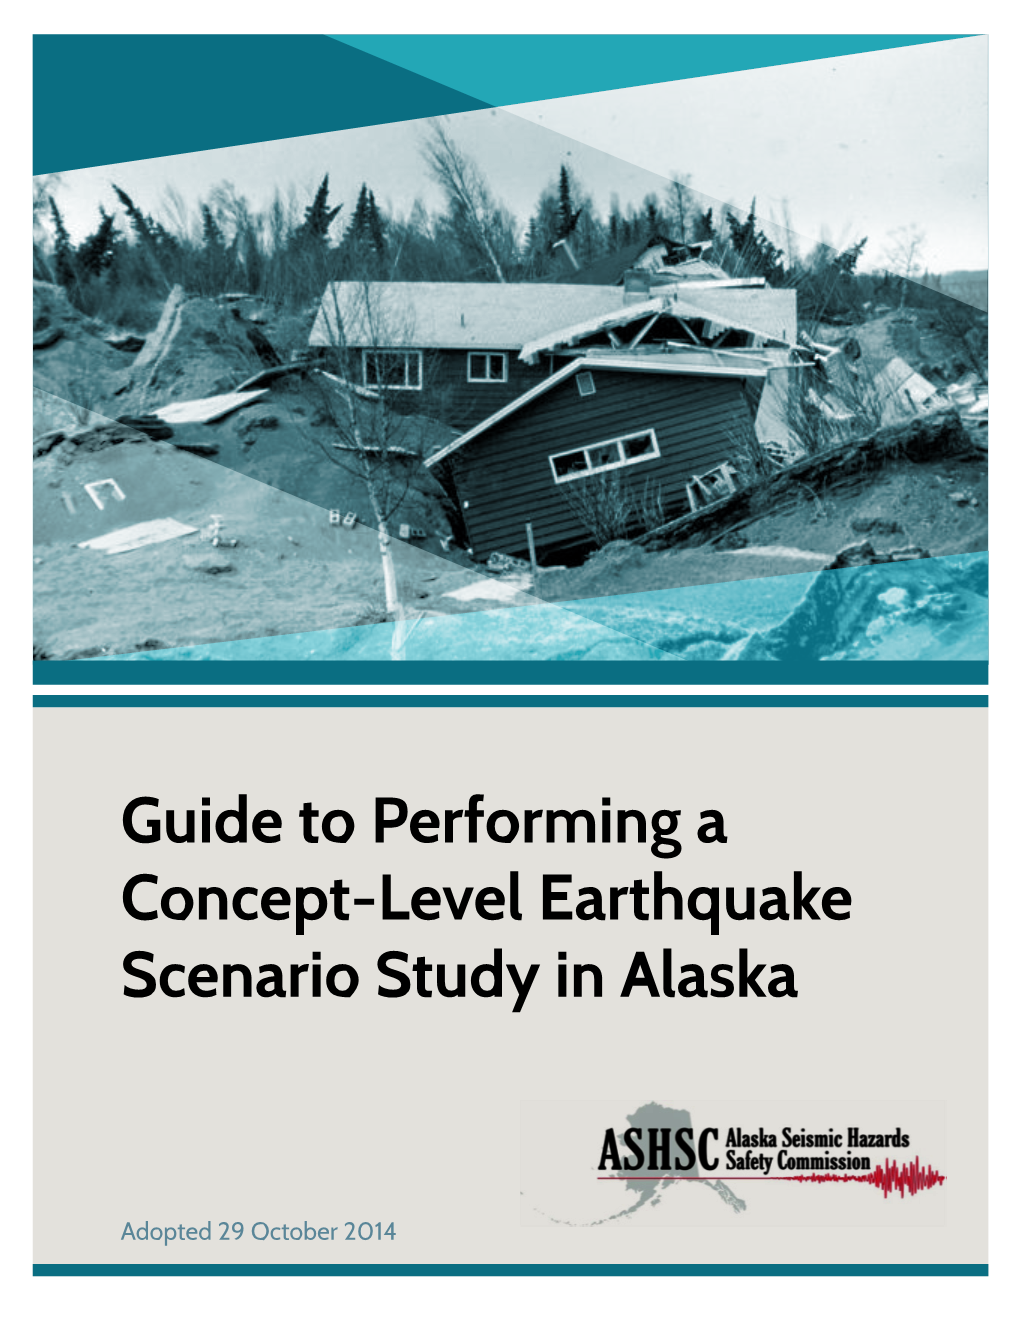 Guide to Performing a Concept-Level Earthquake Scenario Study in Alaska